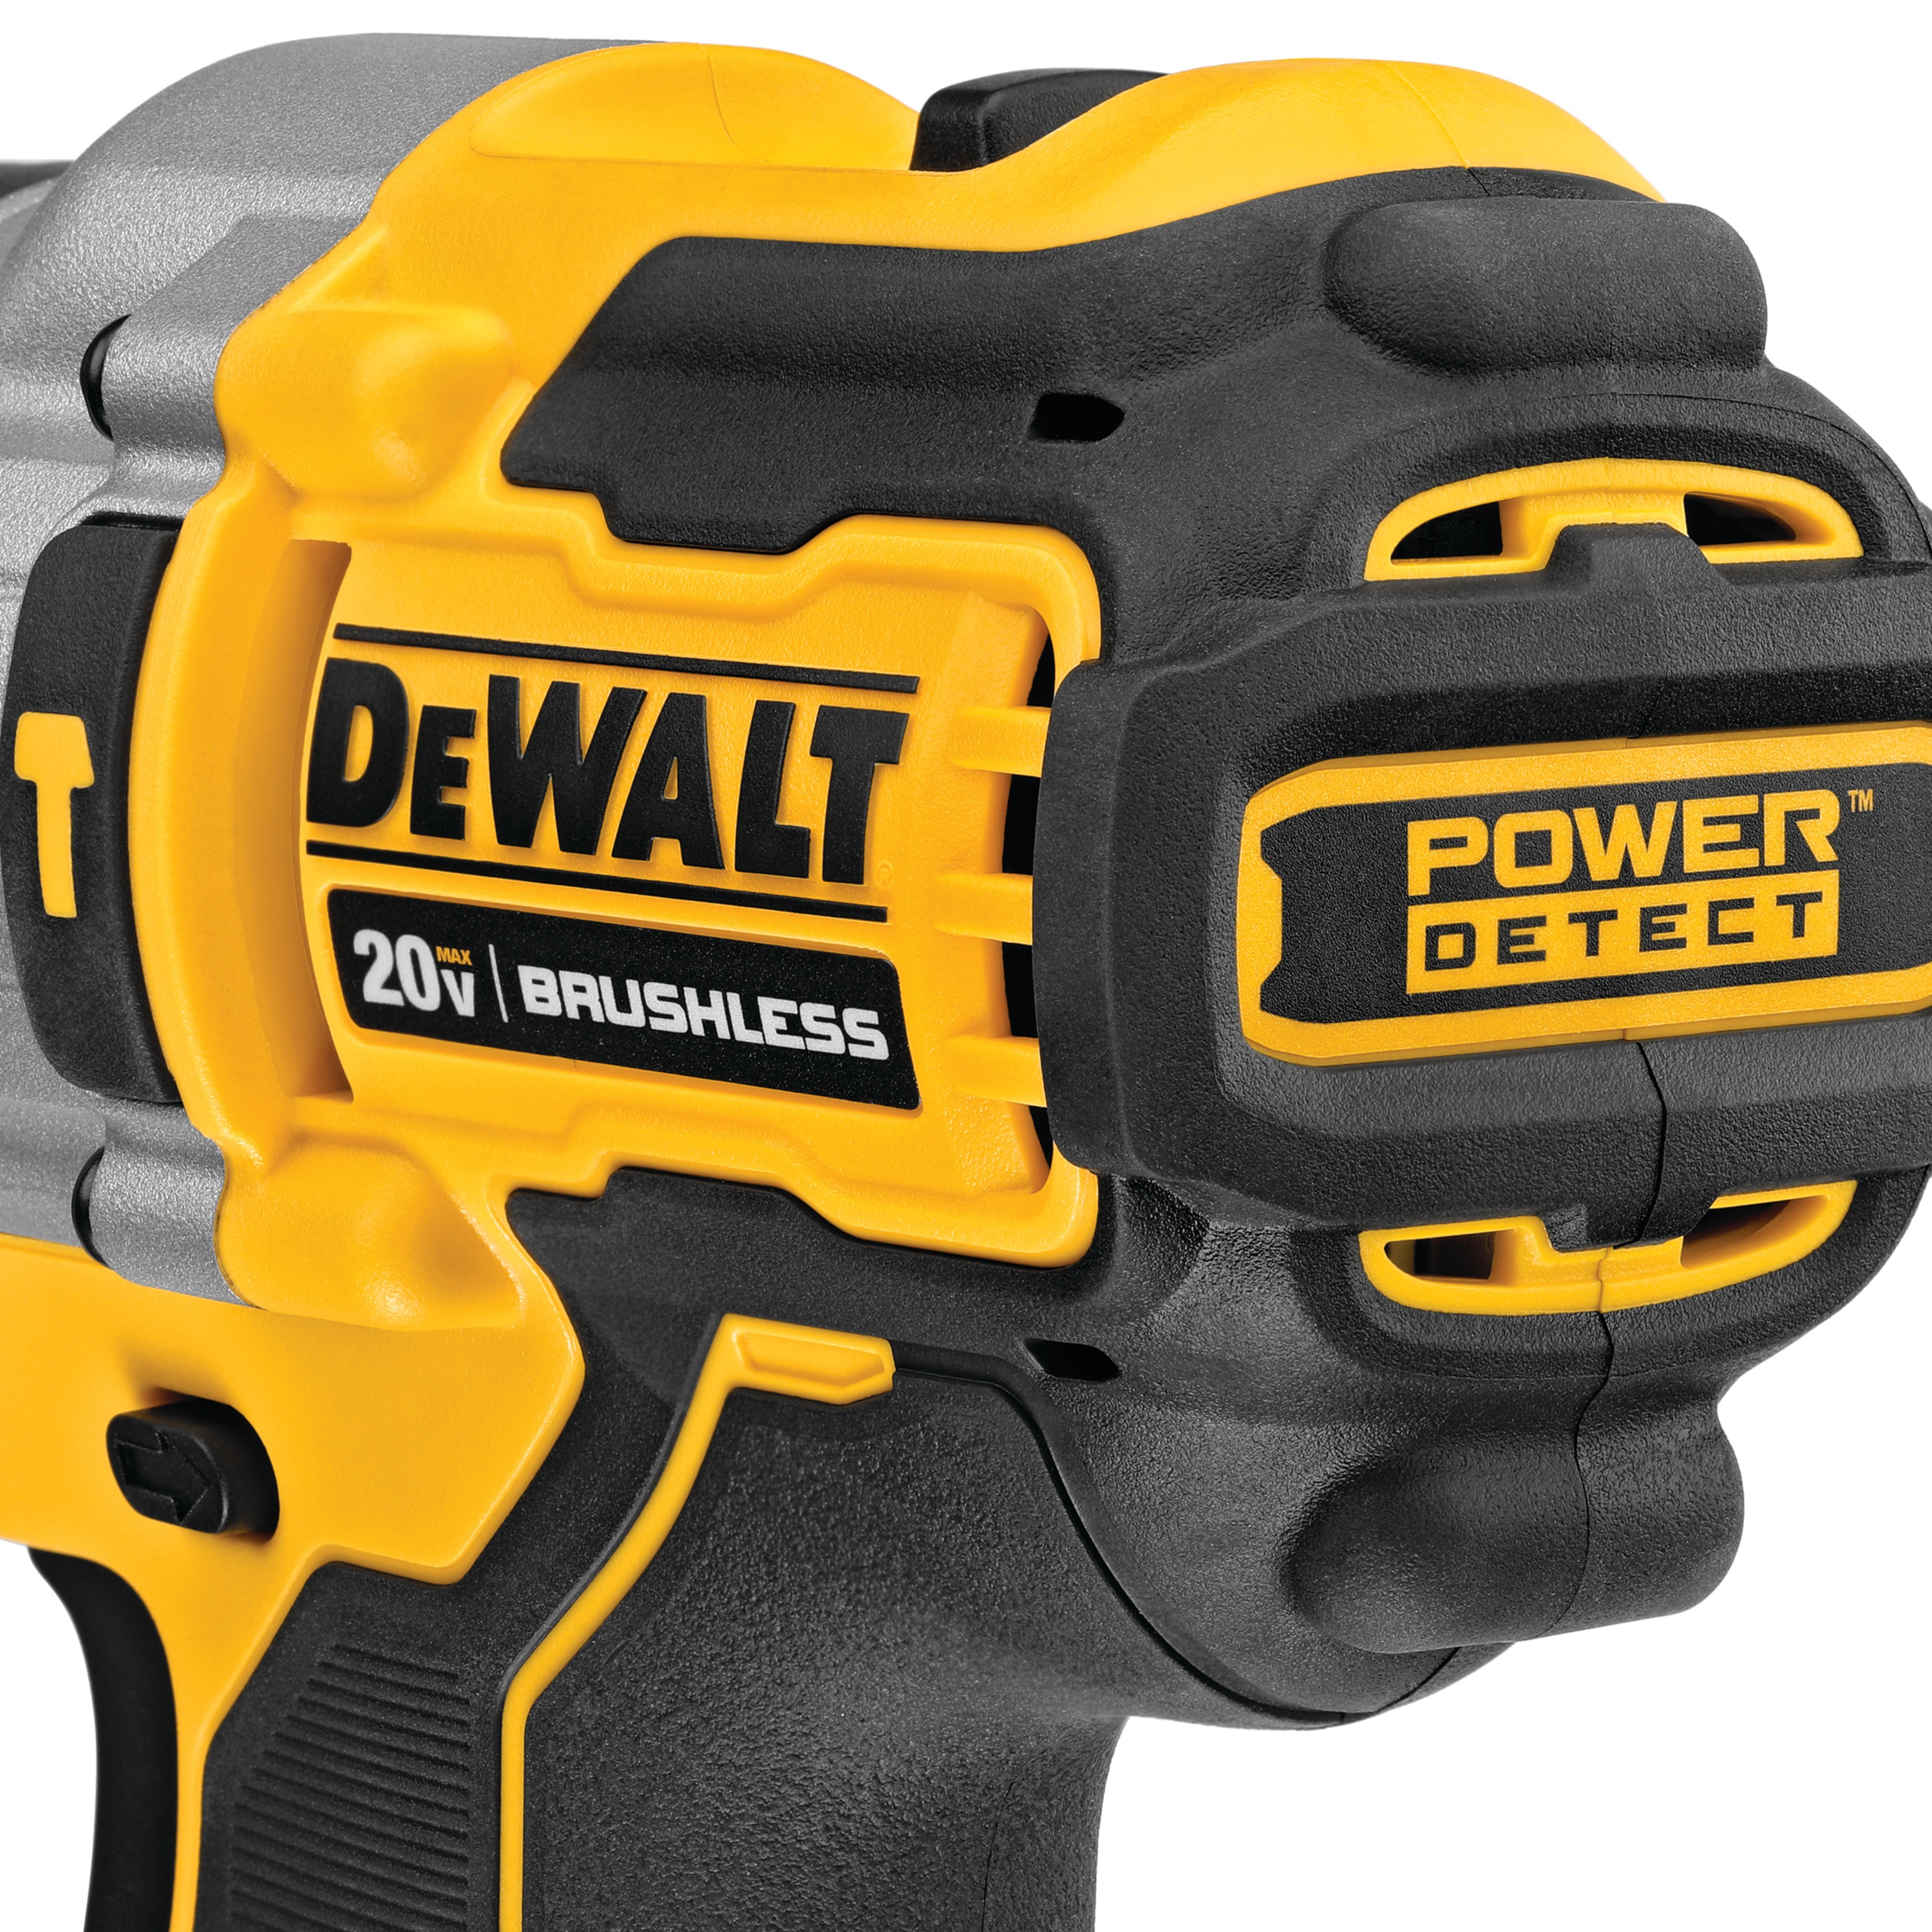 DEWALT - 20V MAX XR 12 in Brushless Hammer DrillDriver With POWER DETECT Tool Technology Kit - DCD998W1